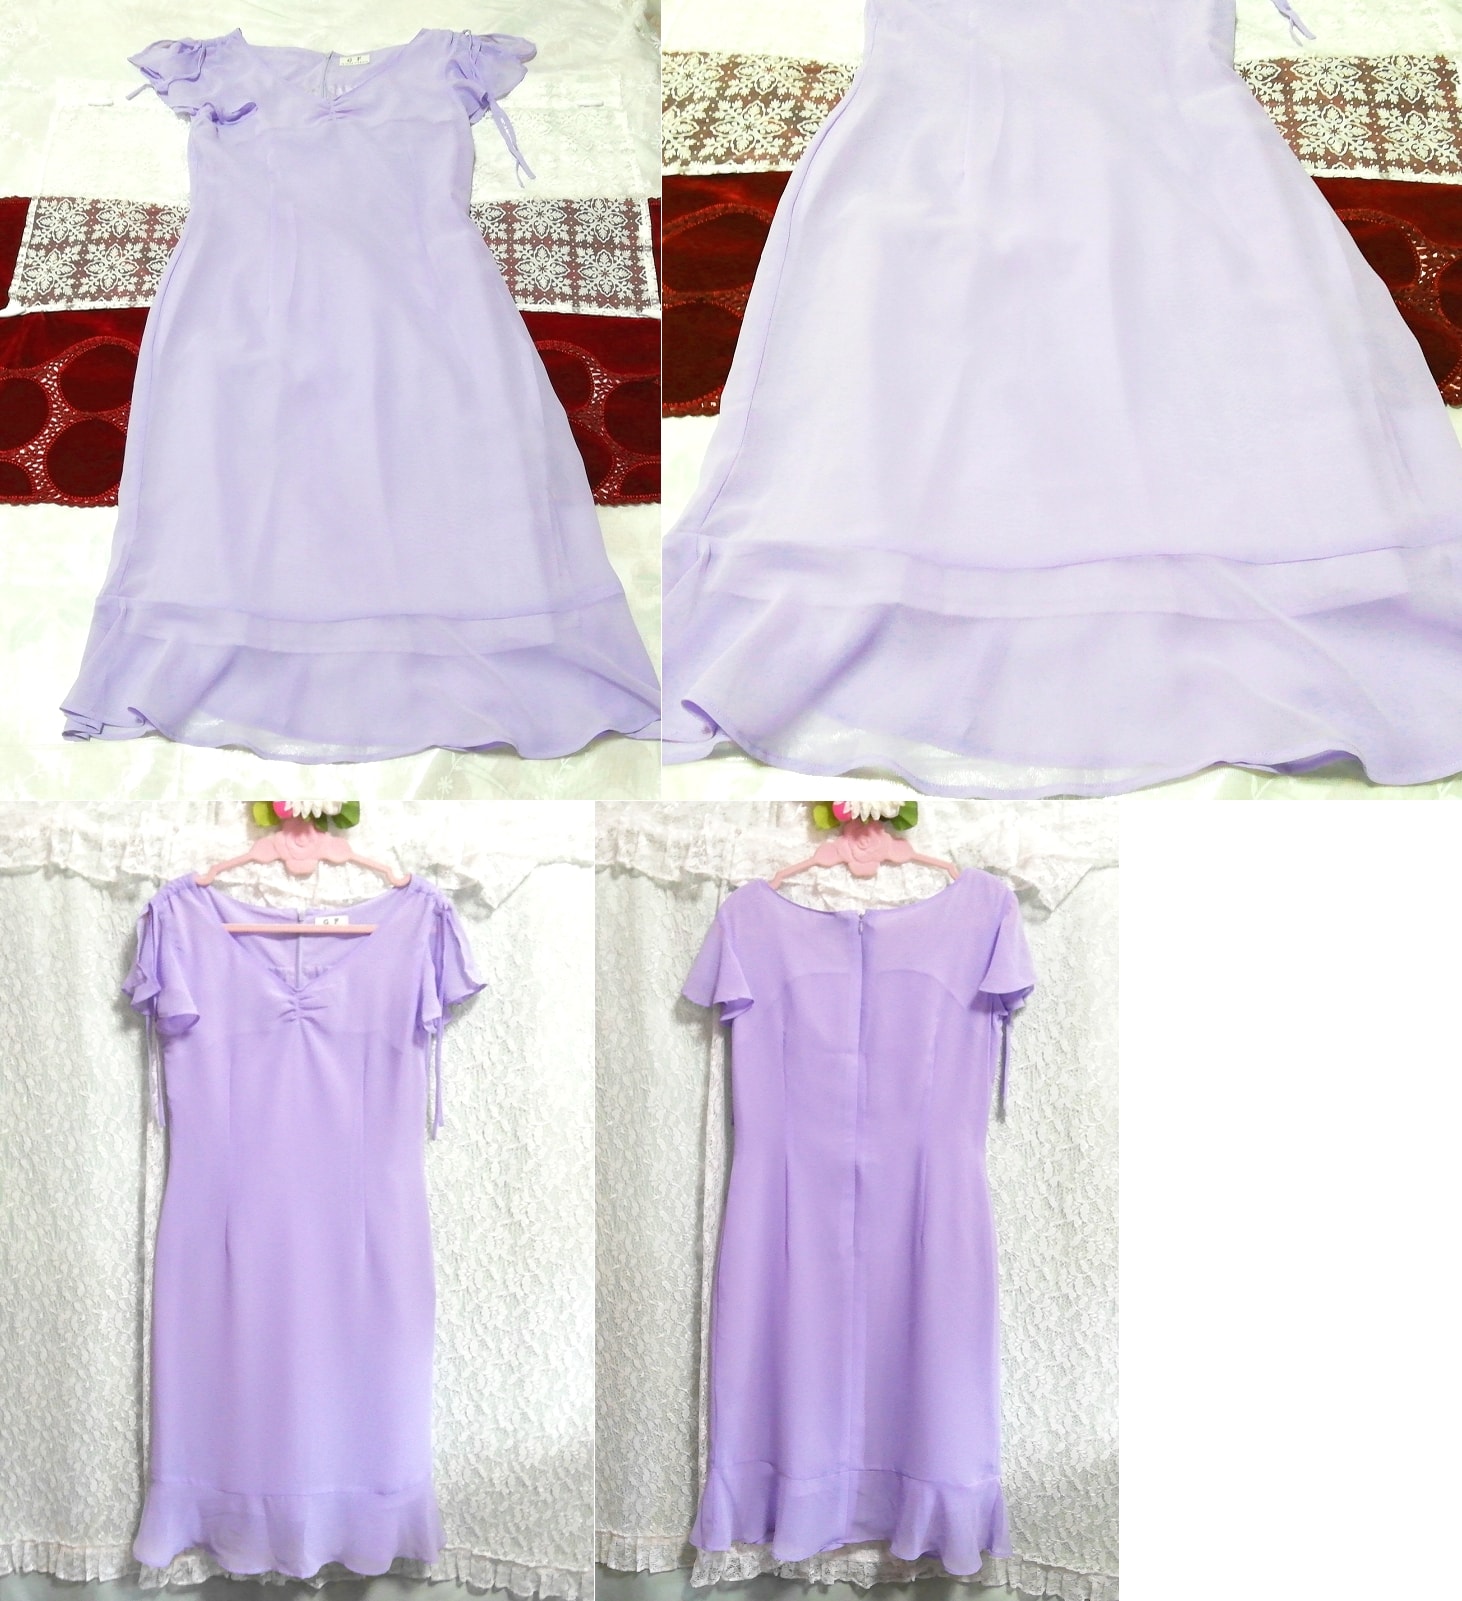 Lila Negligé-Nachthemd aus Chiffon mit kurzen Ärmeln, Mode, Frauenmode, Nachtwäsche, Pyjama